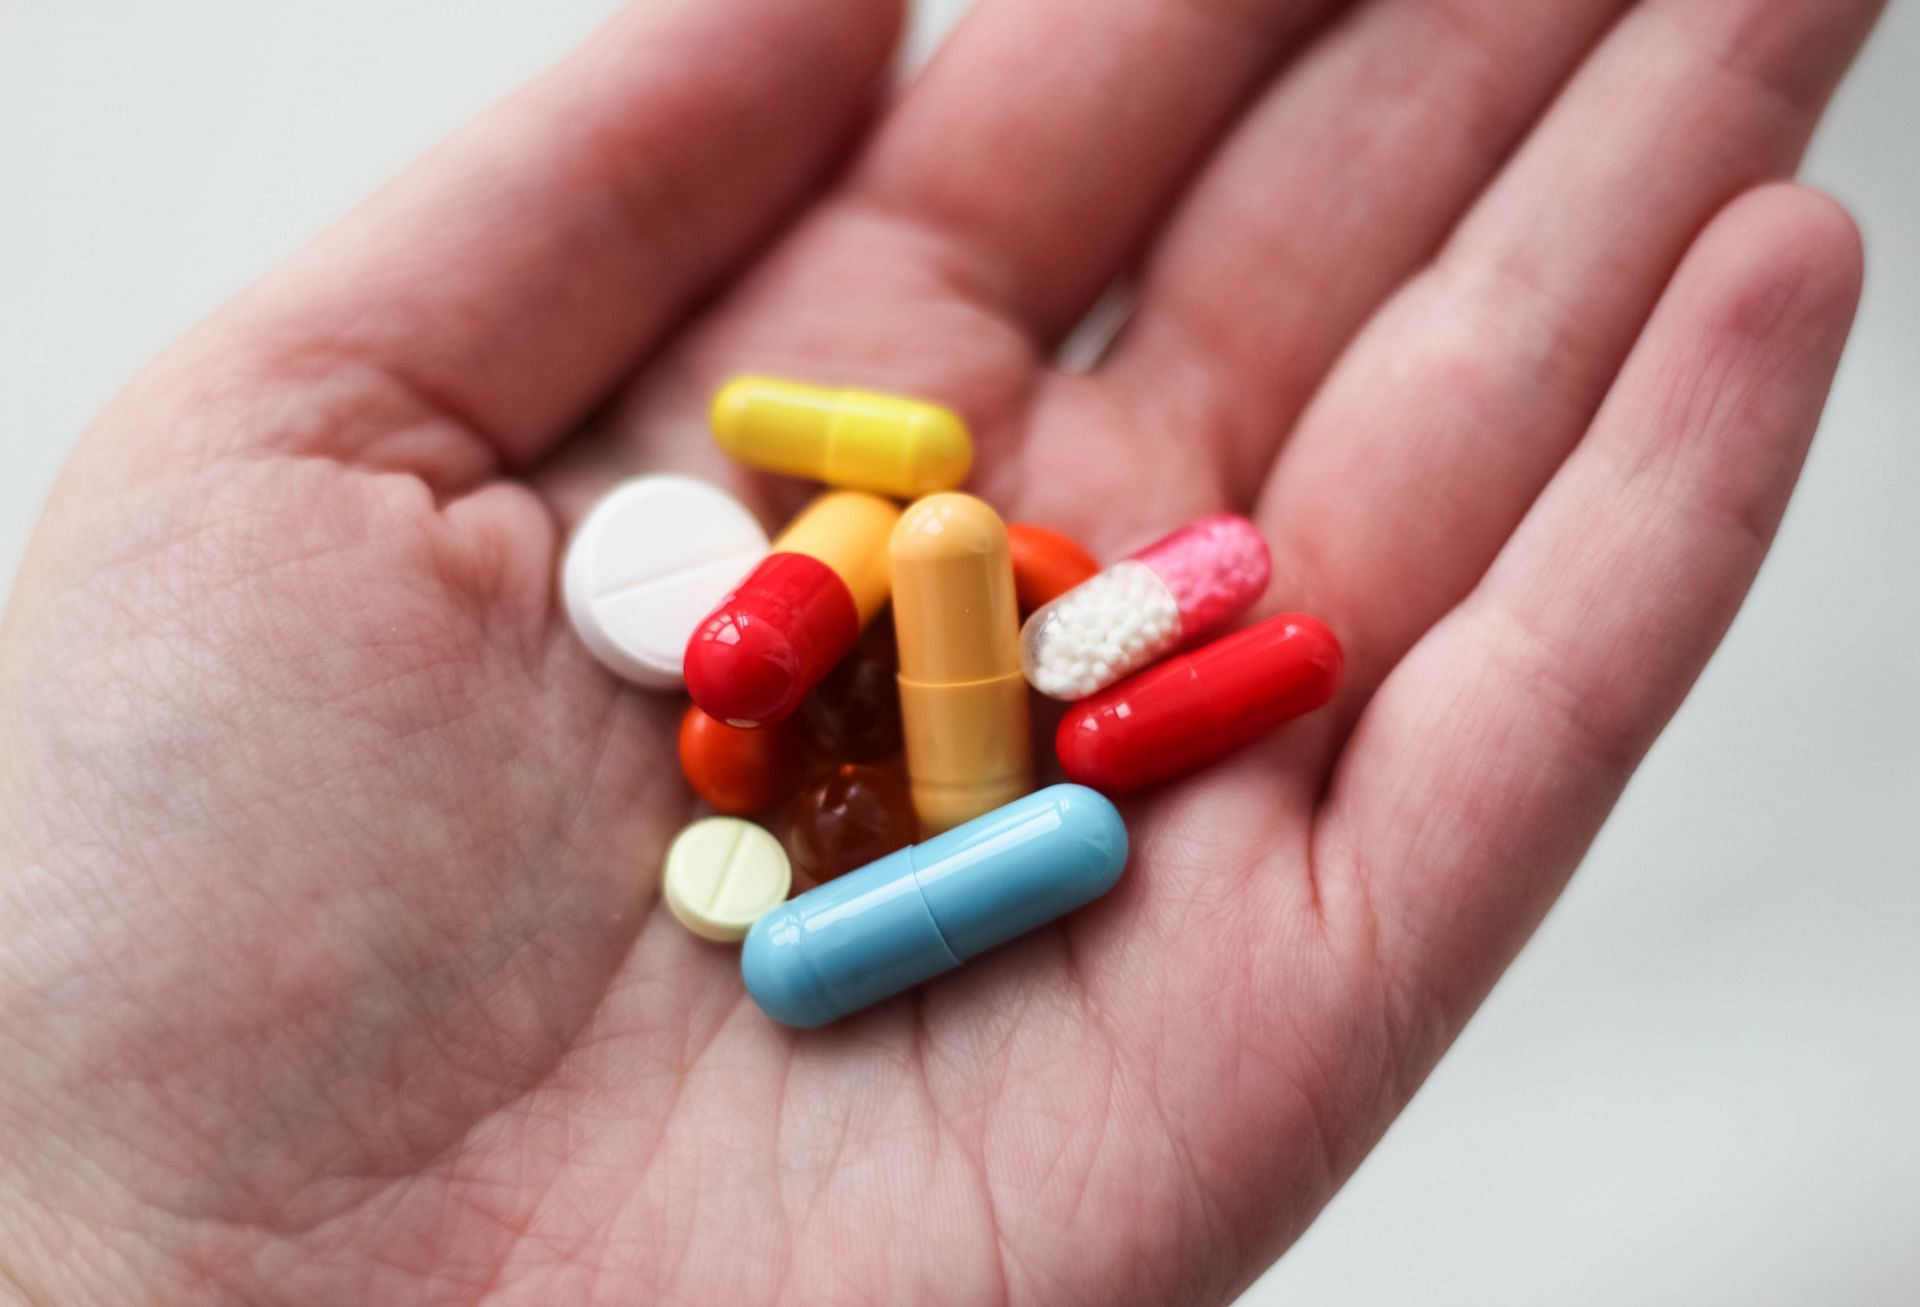 Supplements can prevent deficiencies (Image via Unsplash/Ksenia Yakovleva)